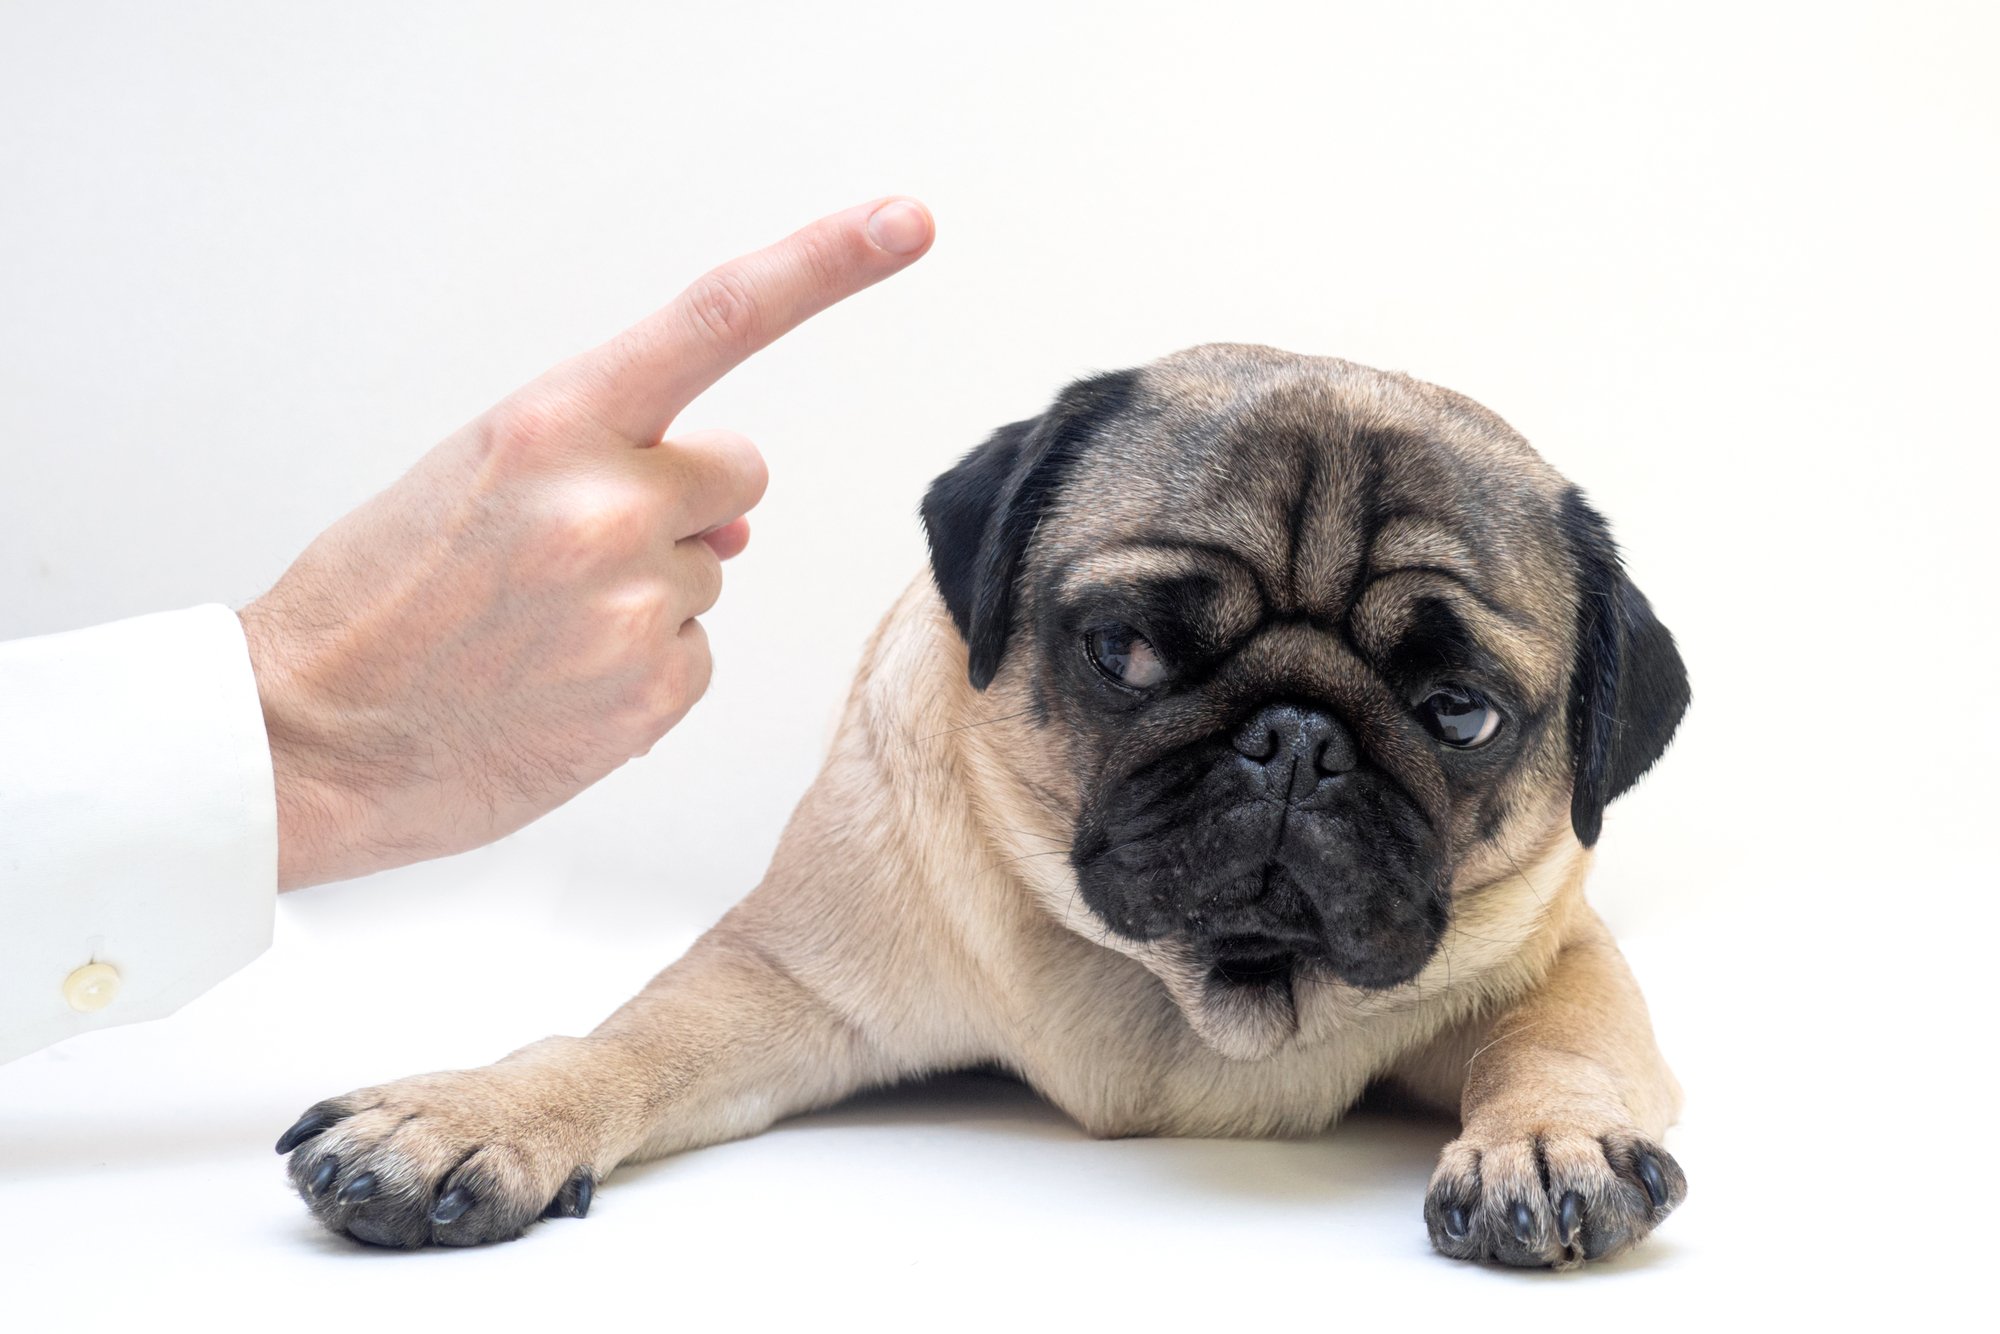 How To Correct A Dog's Bad Behavior